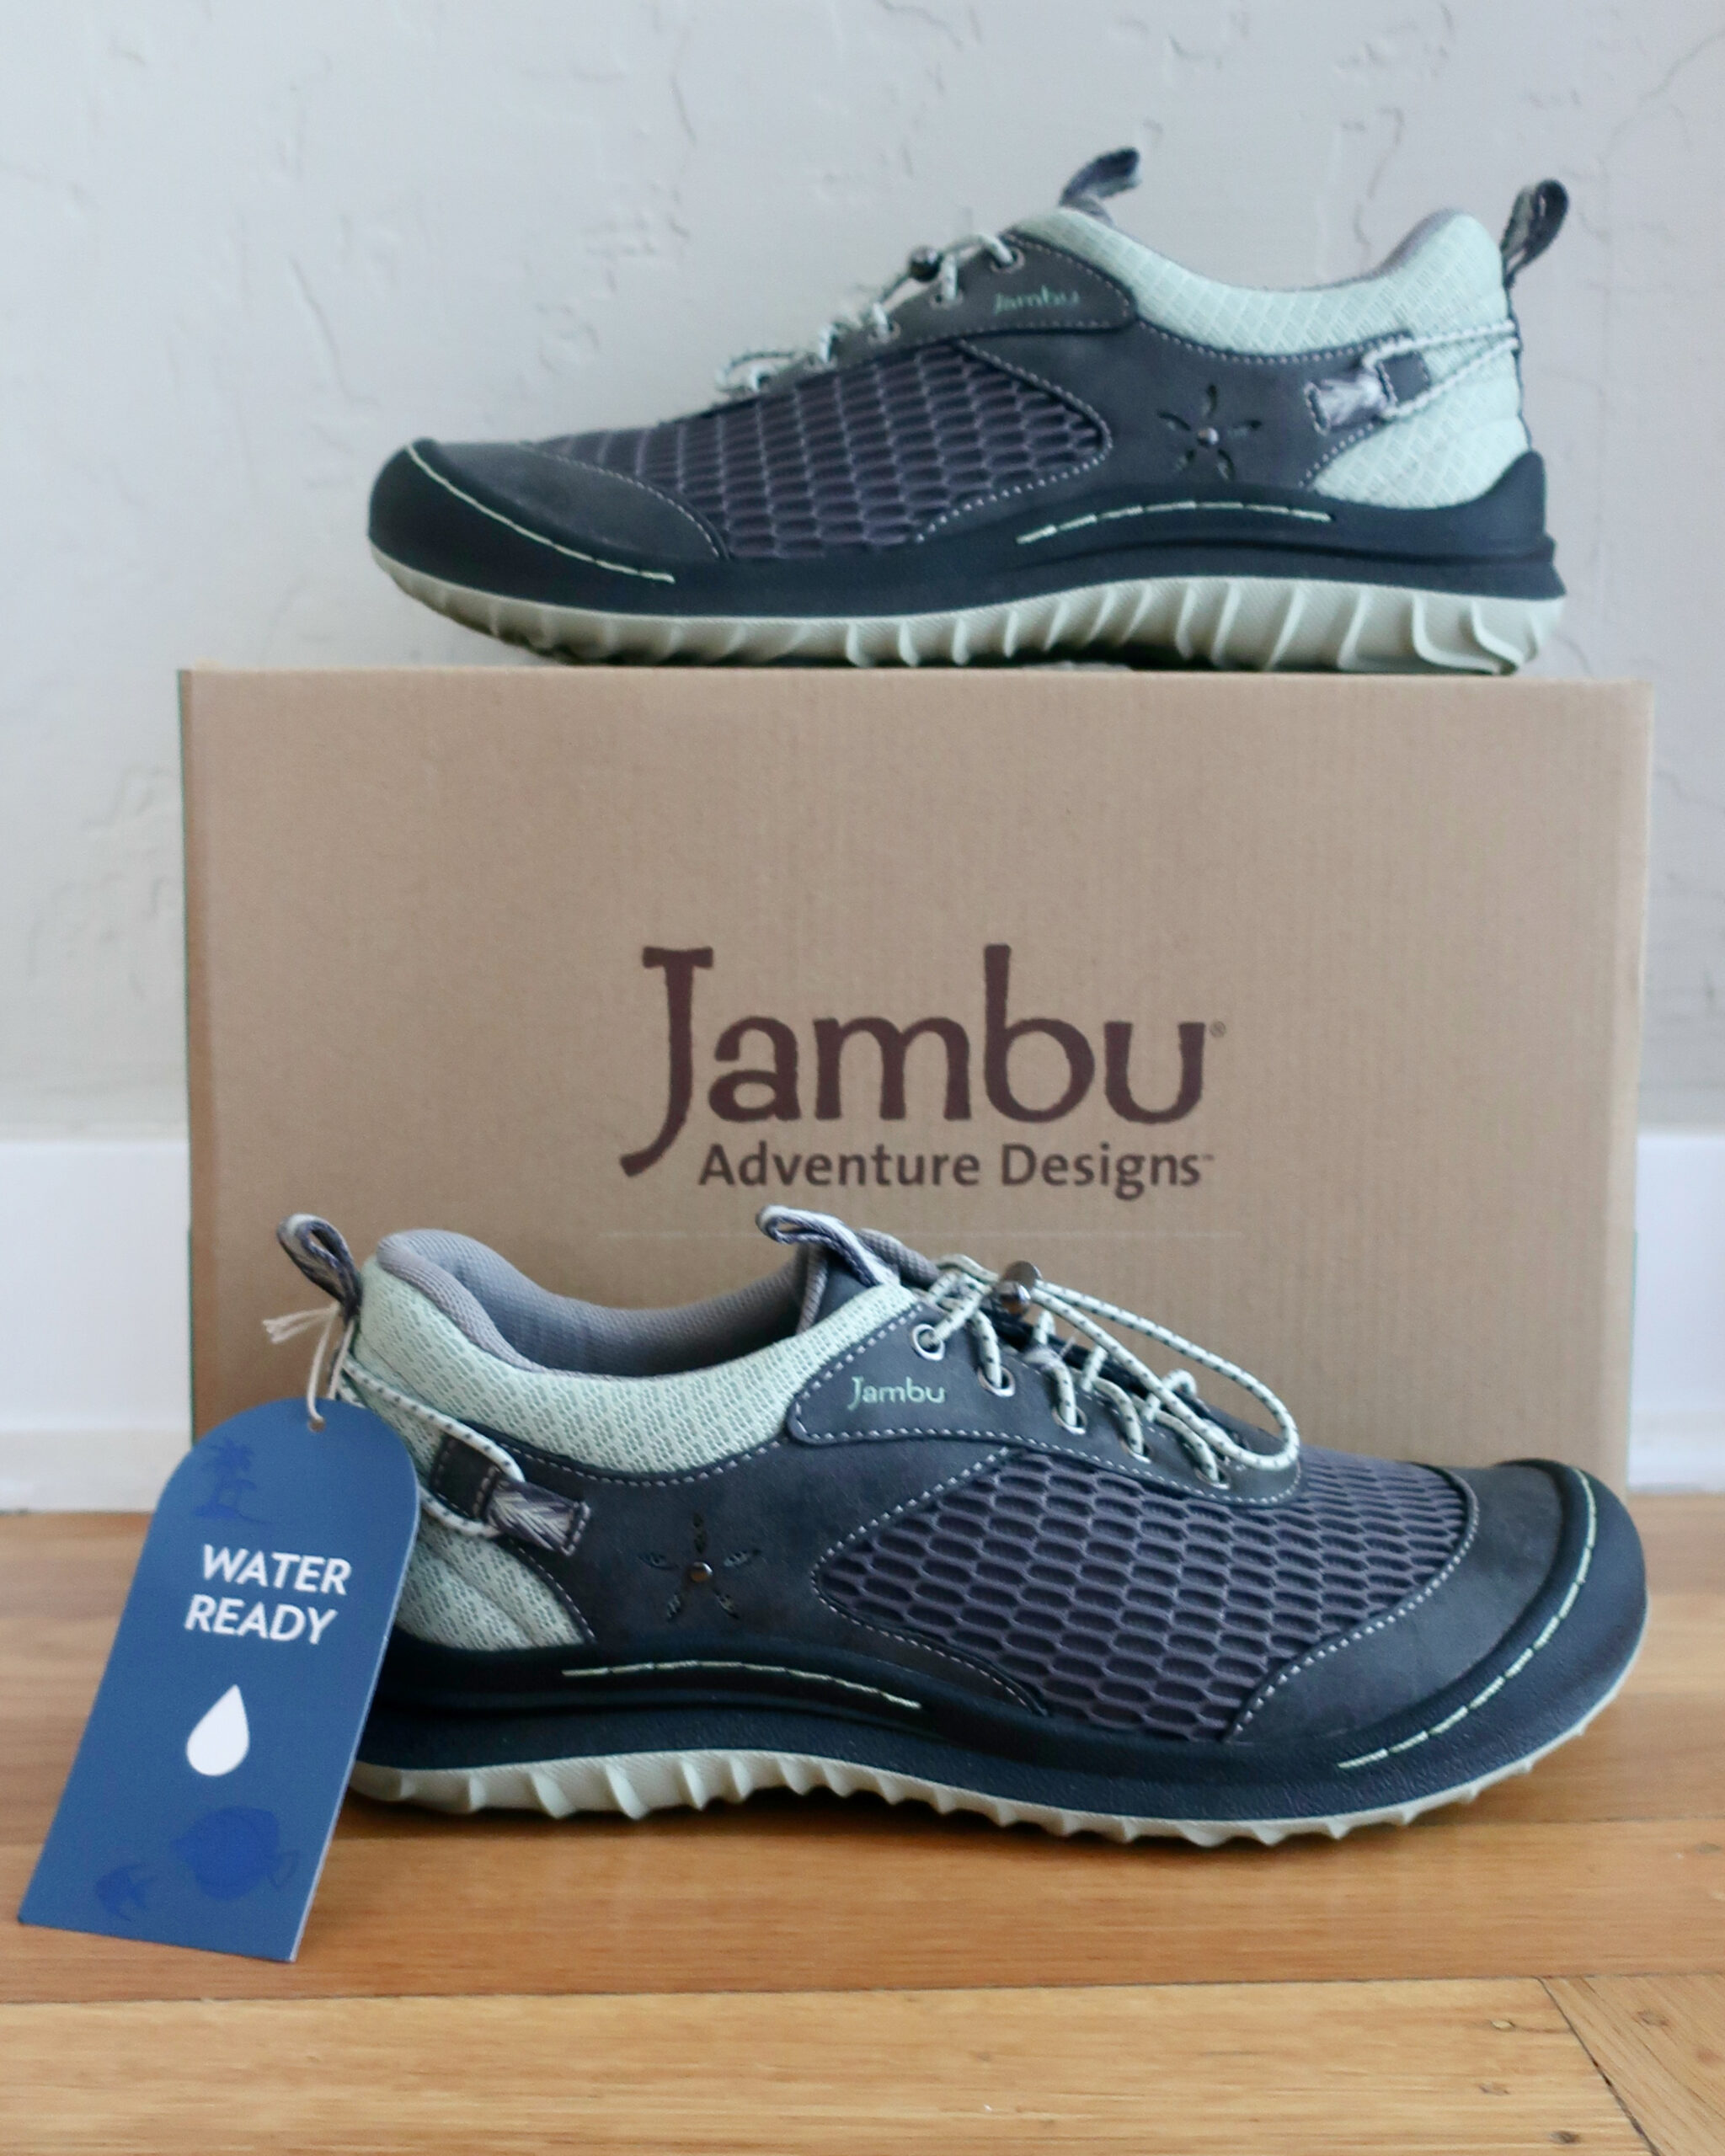 Review of Jambu's Sunset Sneakers